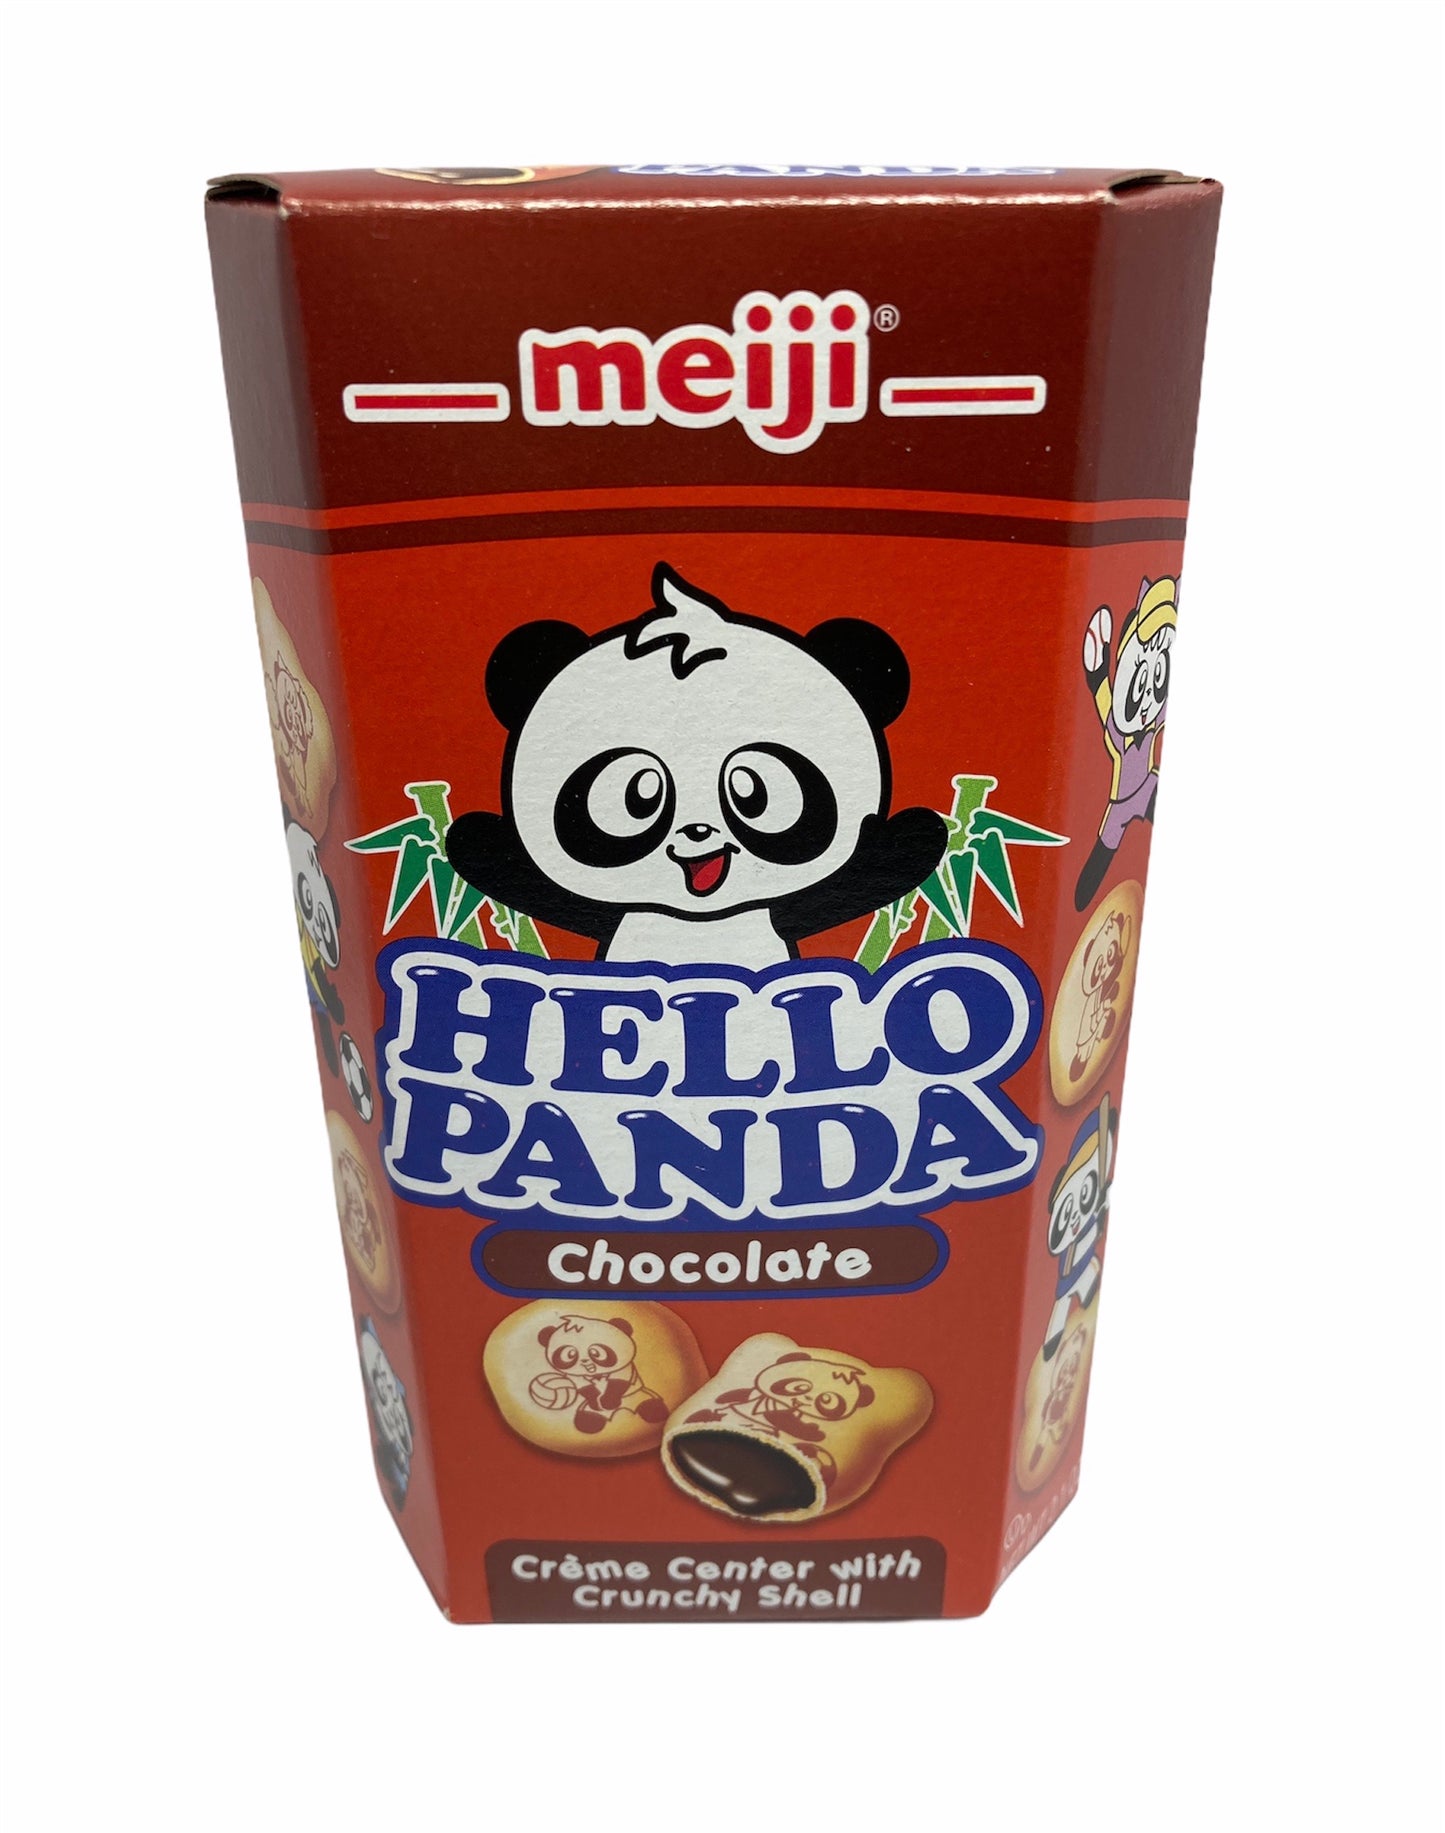 Meija Hello Panda Chocolate